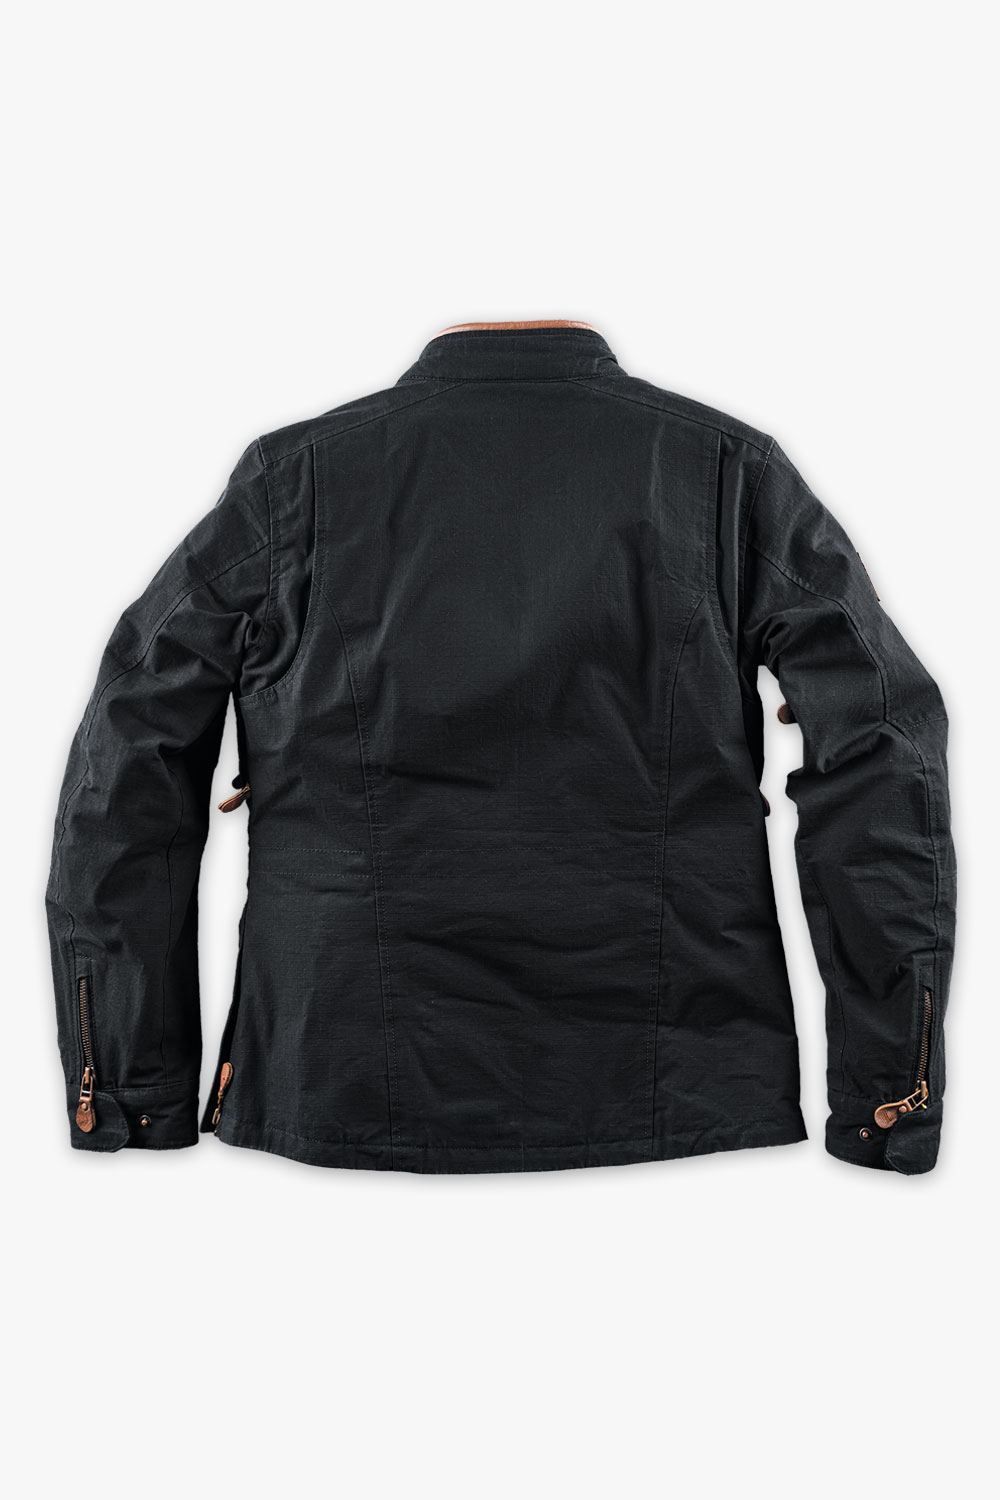 women moto65 suit black jacket back